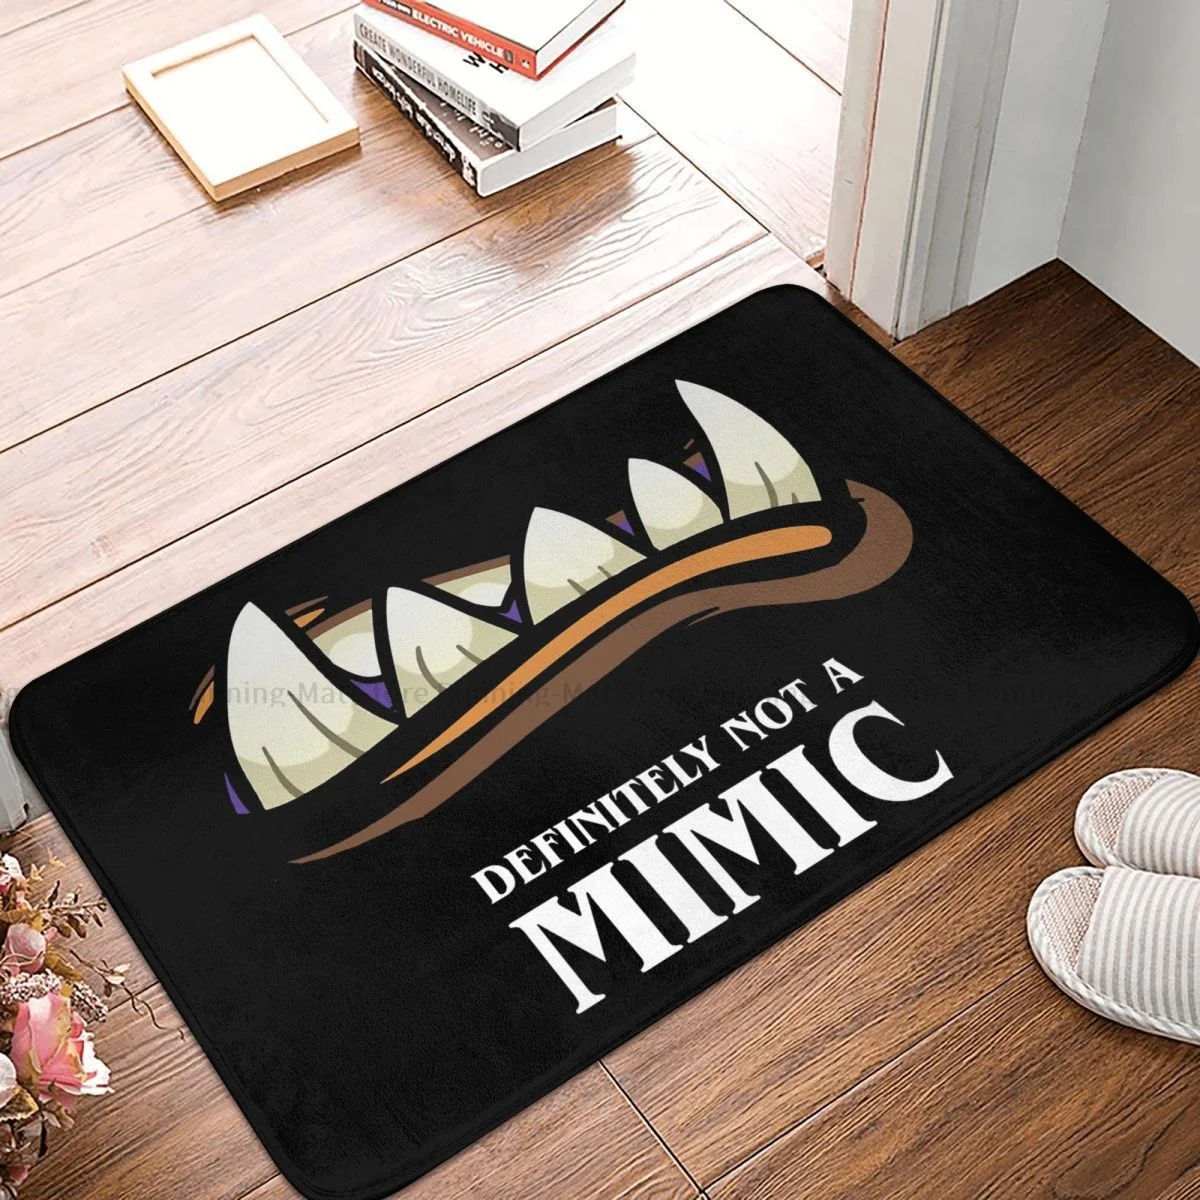 https://ae01.alicdn.com/kf/S036b9e89c3ec491ba584af4bcf52d98bF/DnD-Game-Bedroom-Mat-Definitely-Not-A-Mimic-Tabletop-Doormat-Living-Room-Carpet-Entrance-Door-Rug.jpg